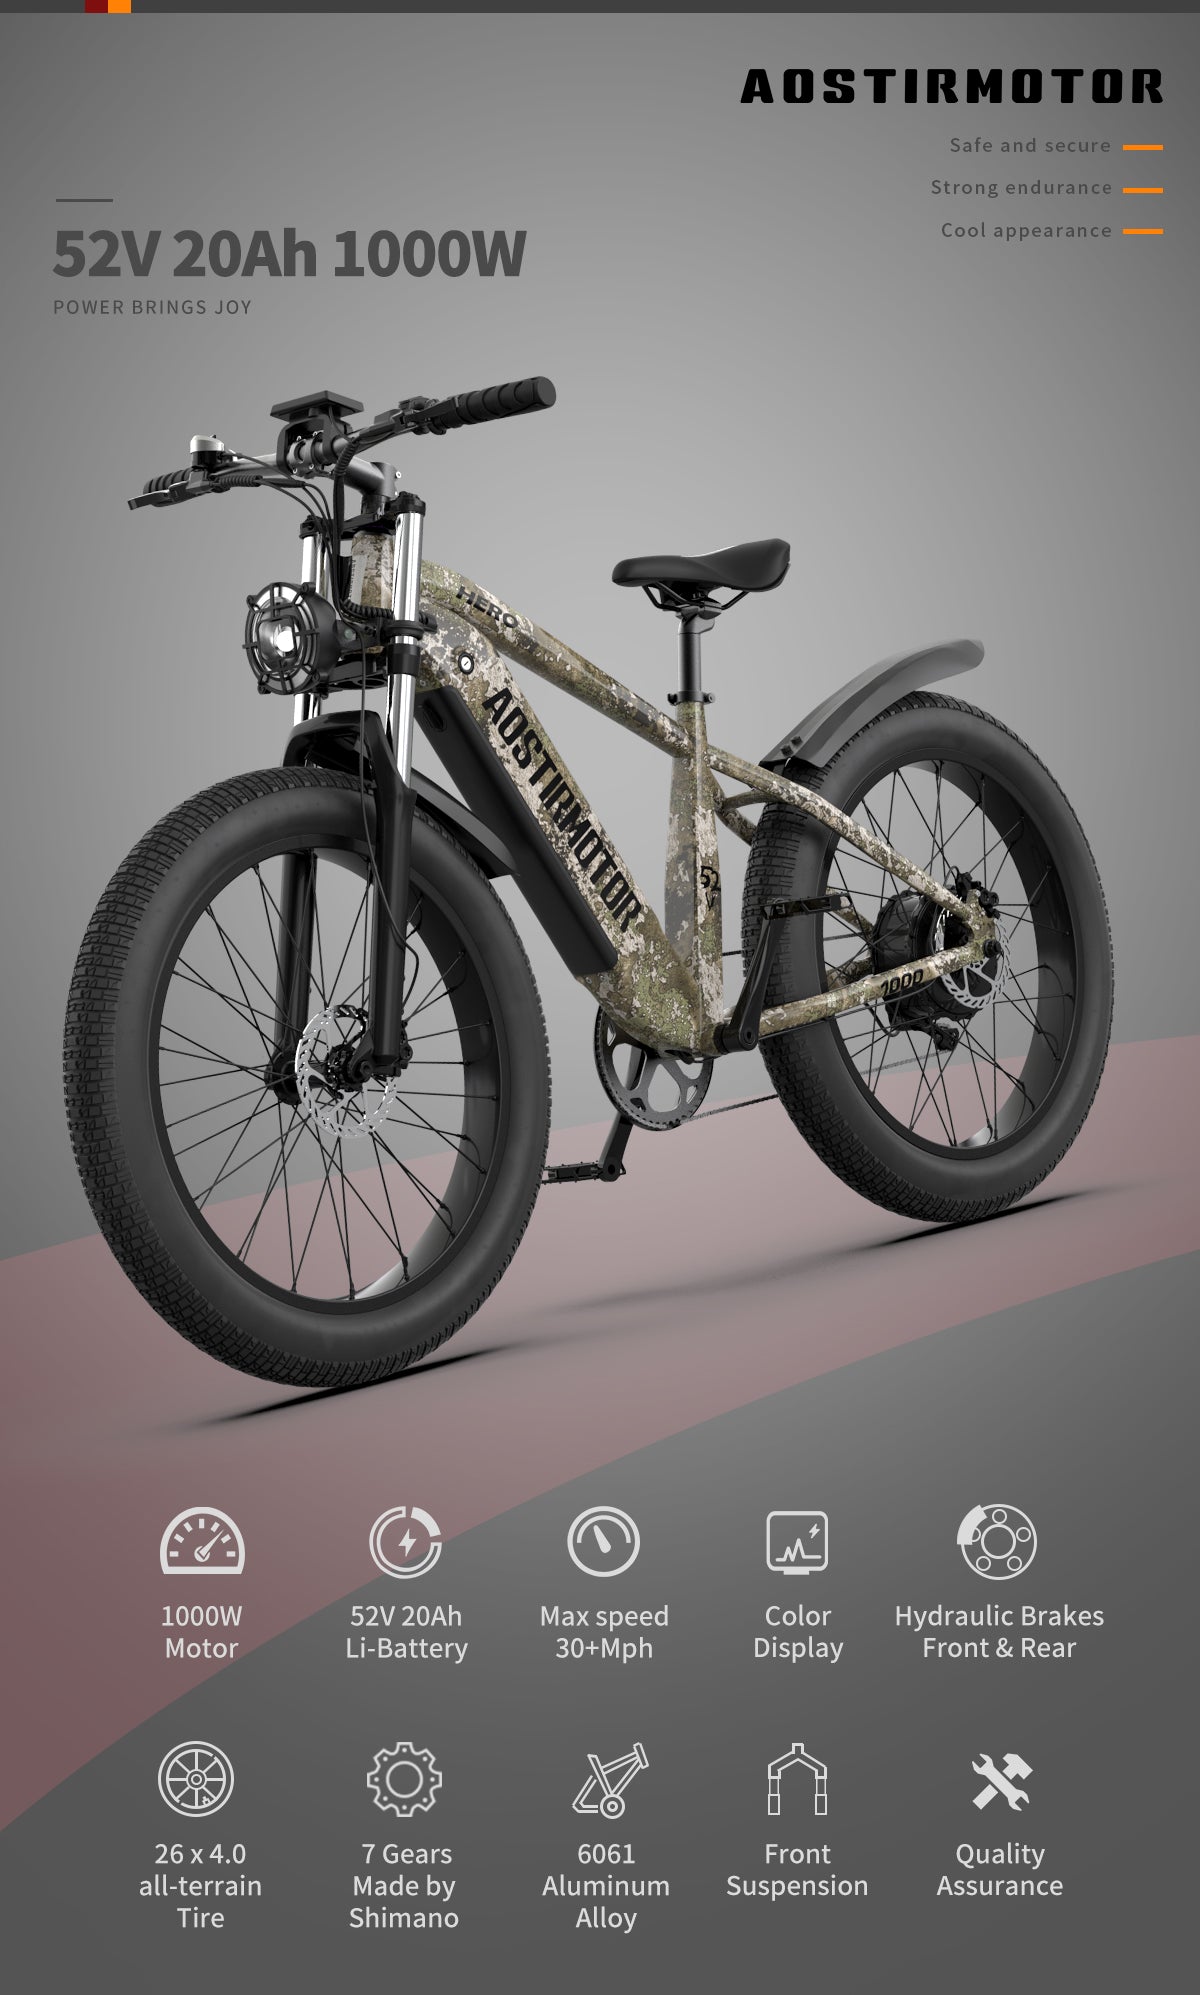 50km/h Electric Bike, 26"x4.0" All-terrain Tire, 7-Speed, 1000W Motor, Samsung 52V 20Ah Li-Battery, Color Display